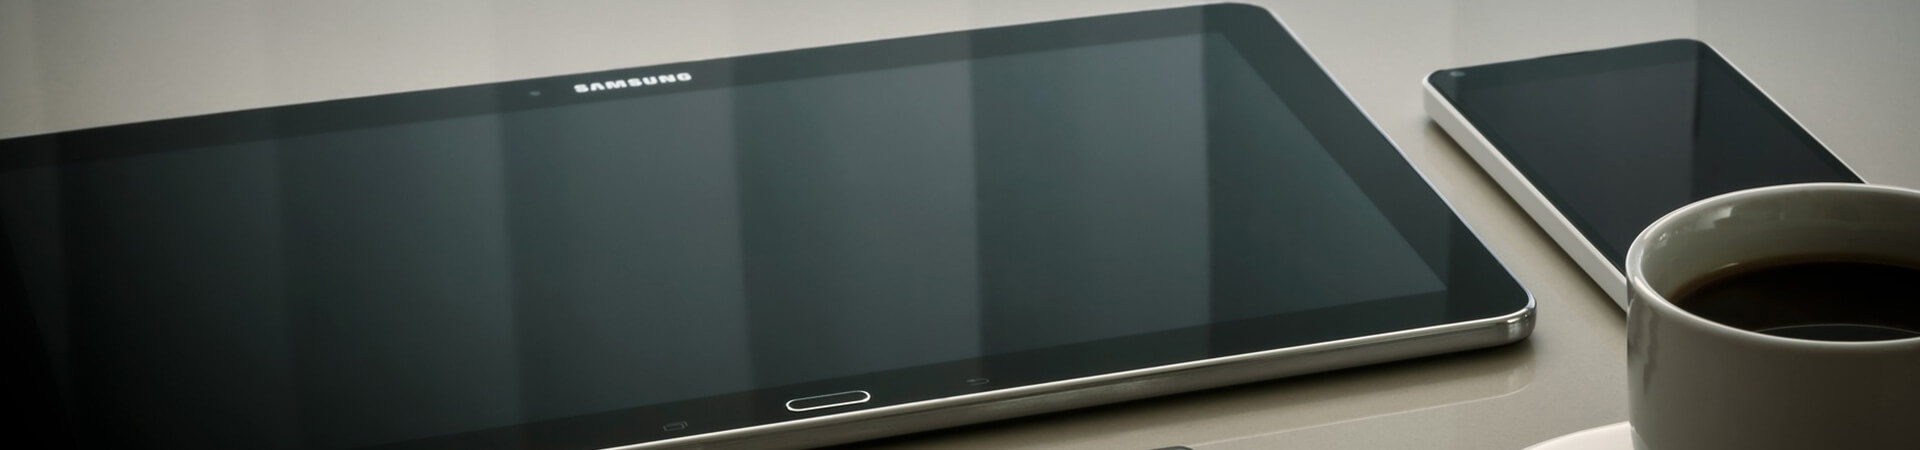 Rent a Samsung Tablet | Aloc Rental